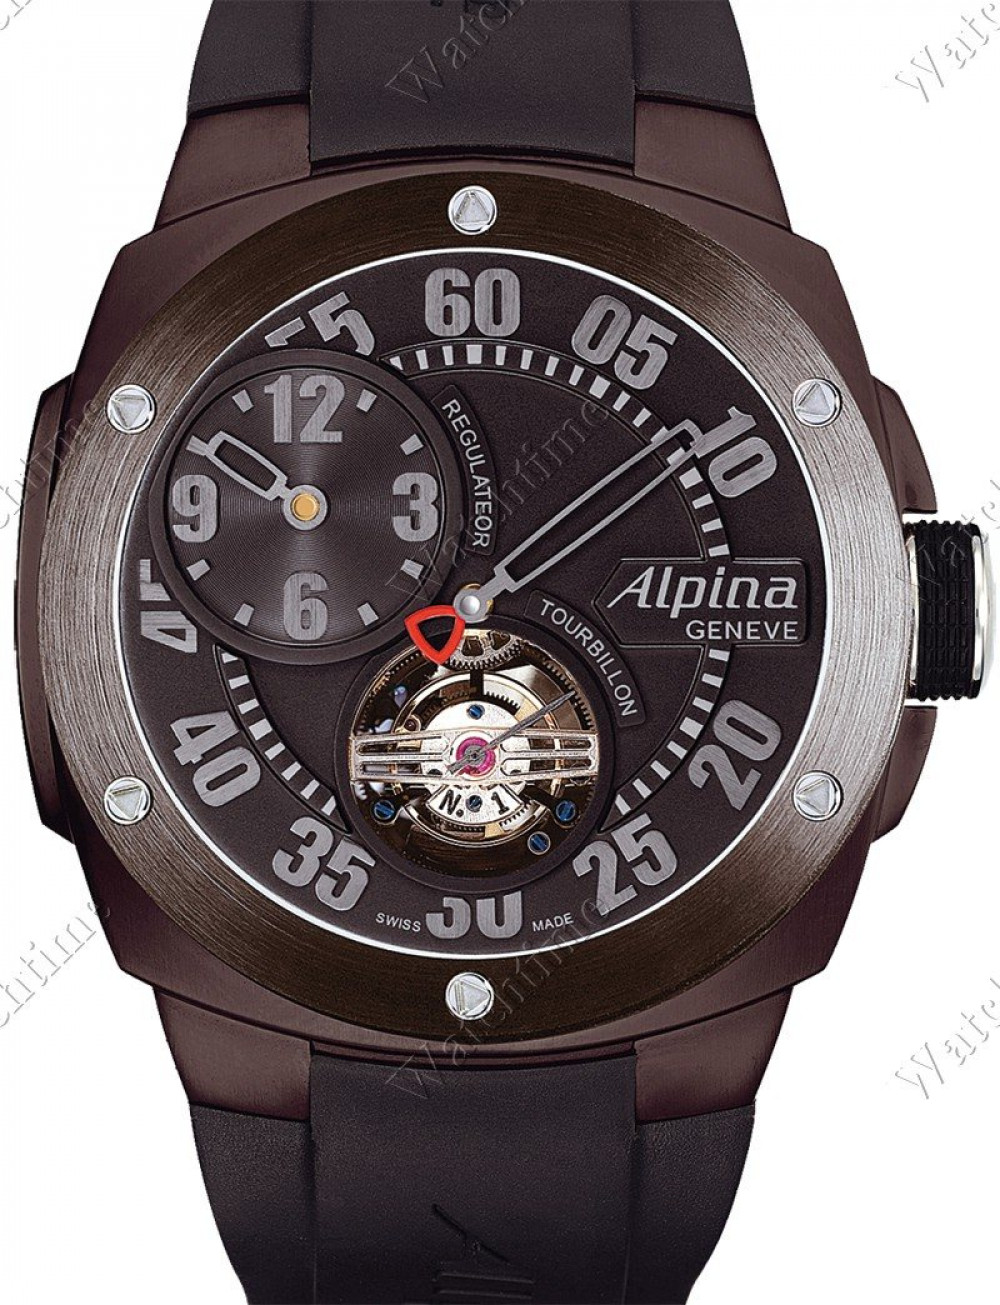 Zegarek firmy Alpina Genève, model Extreme Tourbillon